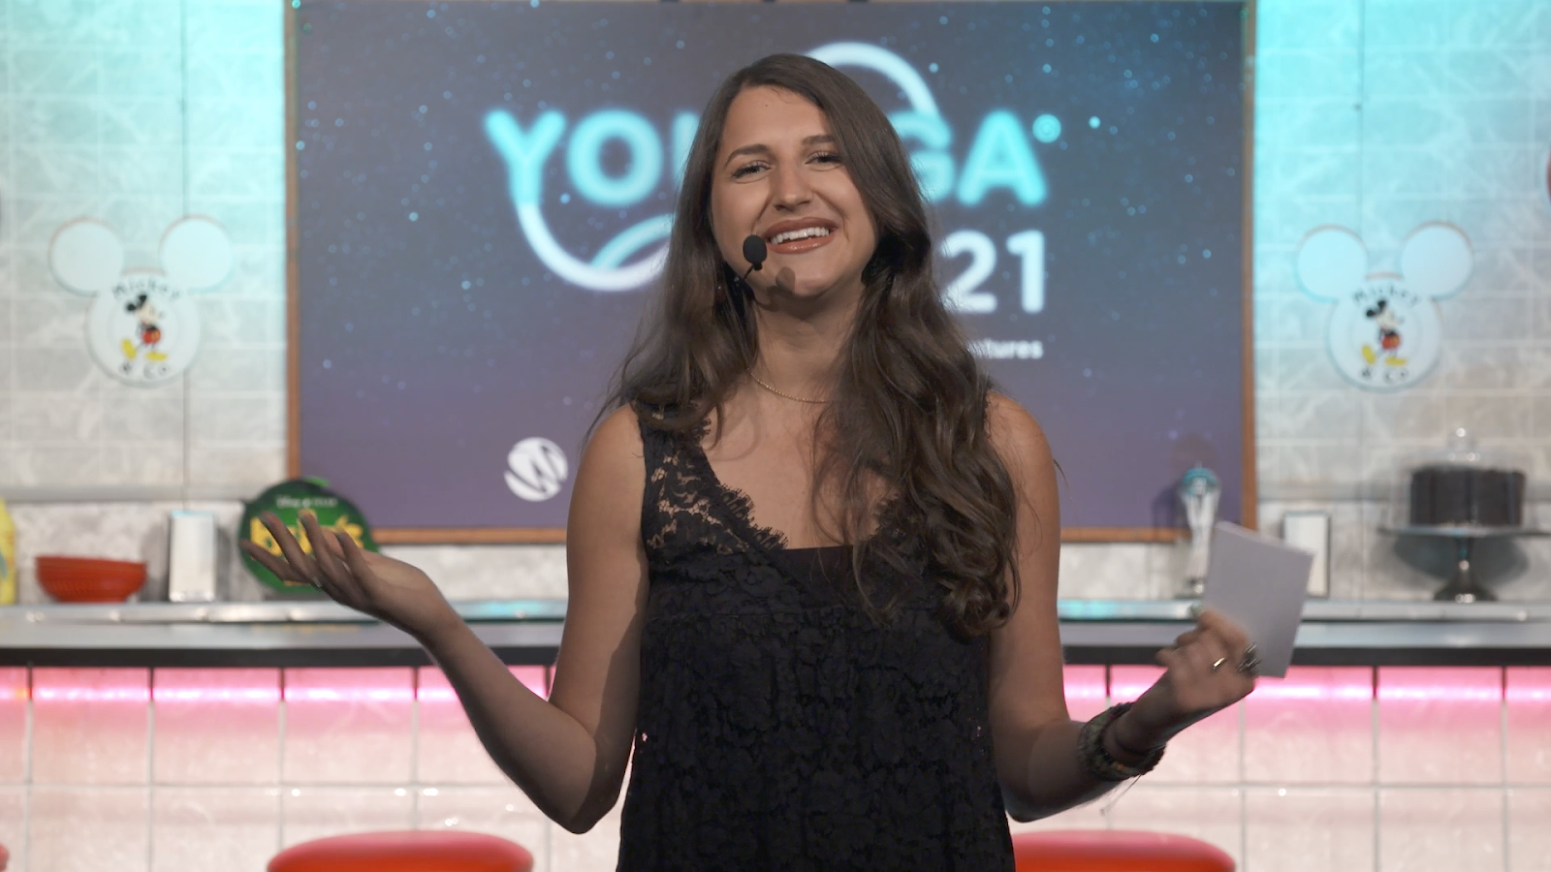 Host at Younga 2021 Disney panel